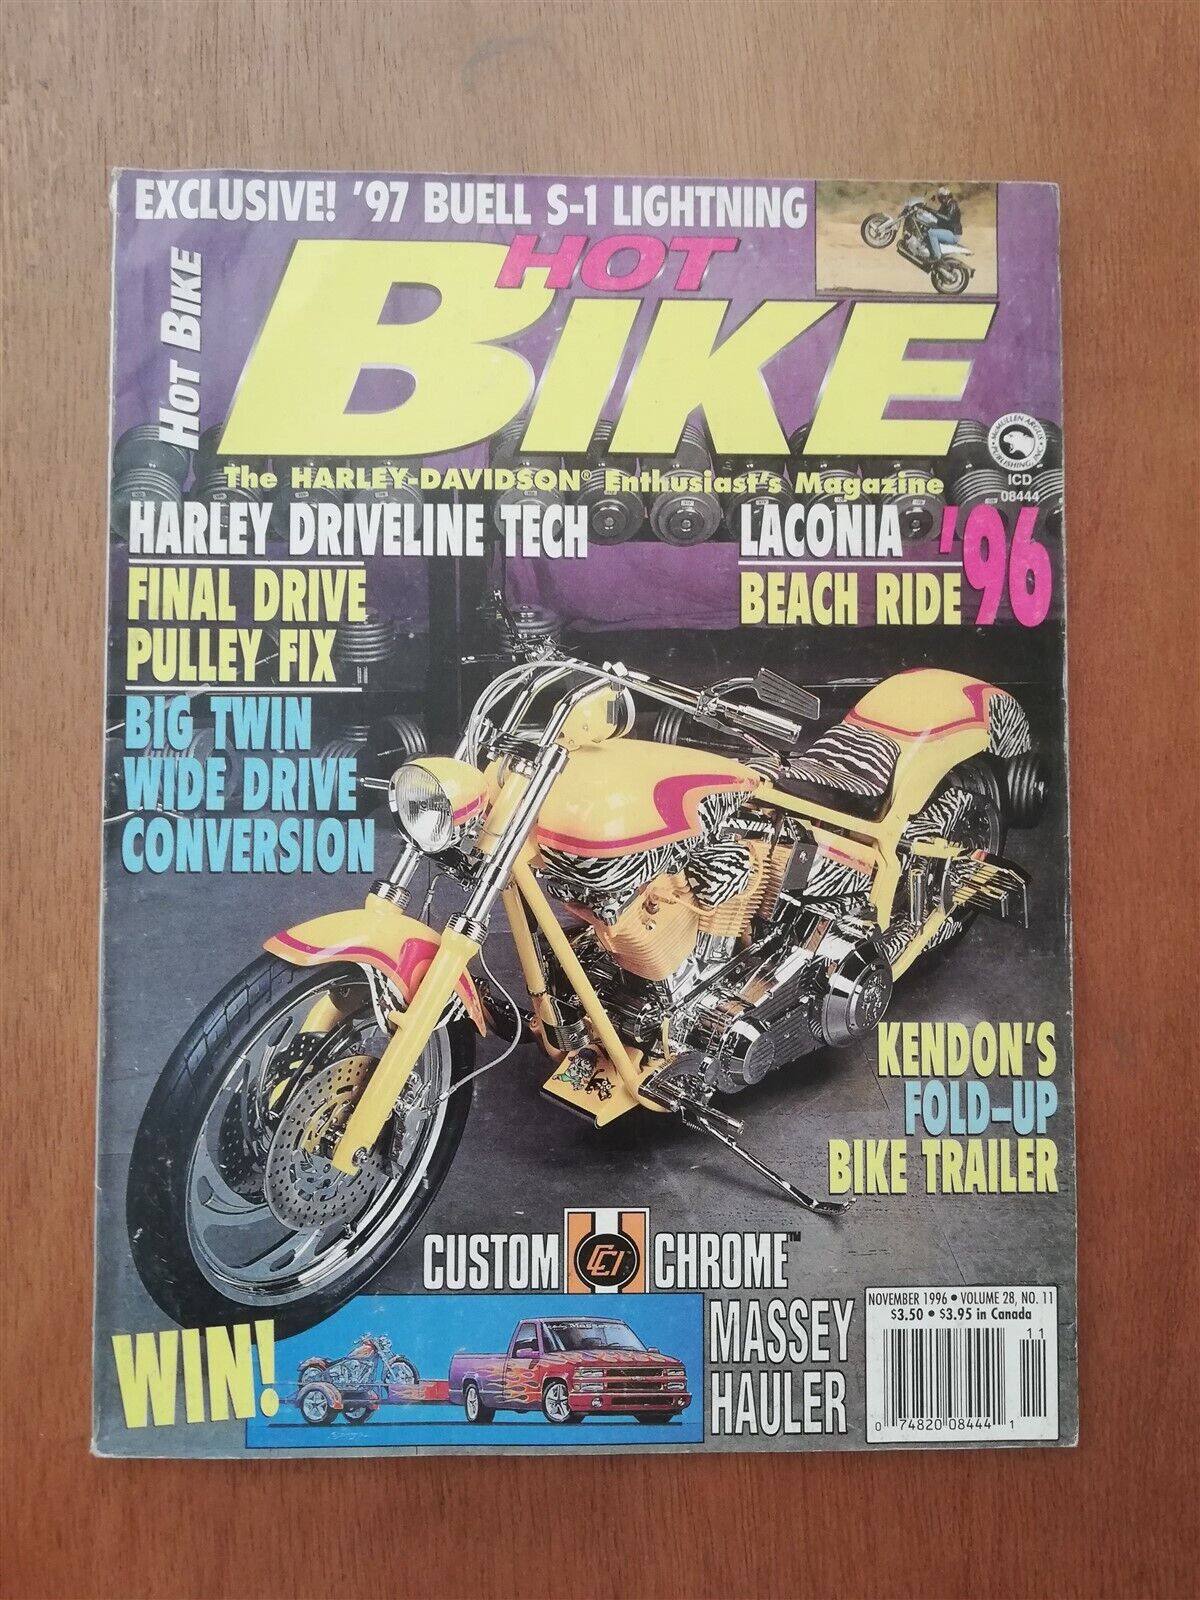 Hot Bike Harley Davidson Magazine November 1996 1997 Buell S-1 Lightning Laconia